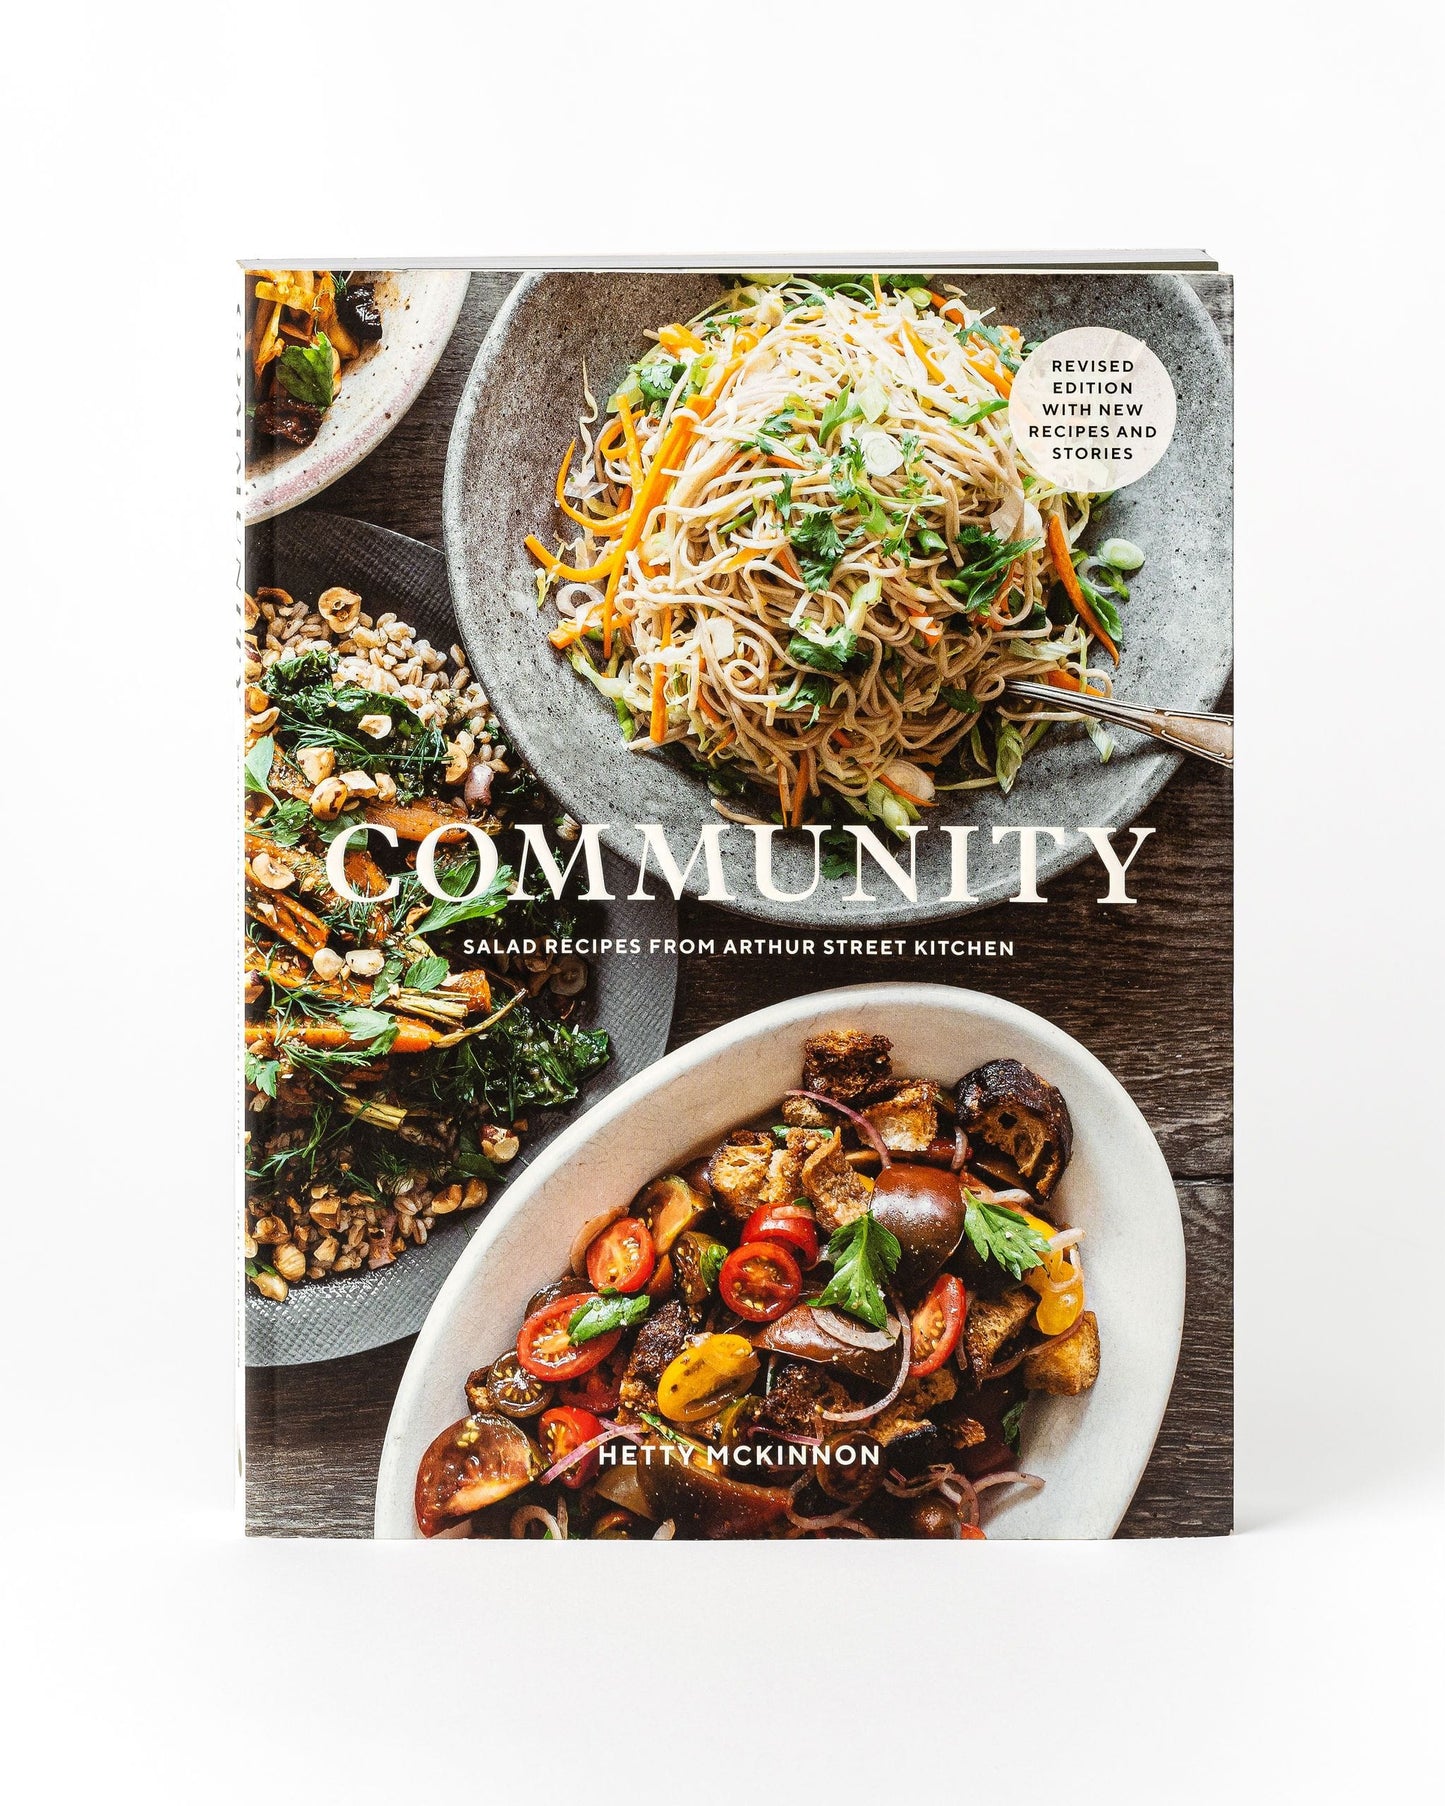 COMMUNITY Cookbook by Hetty McKinnon